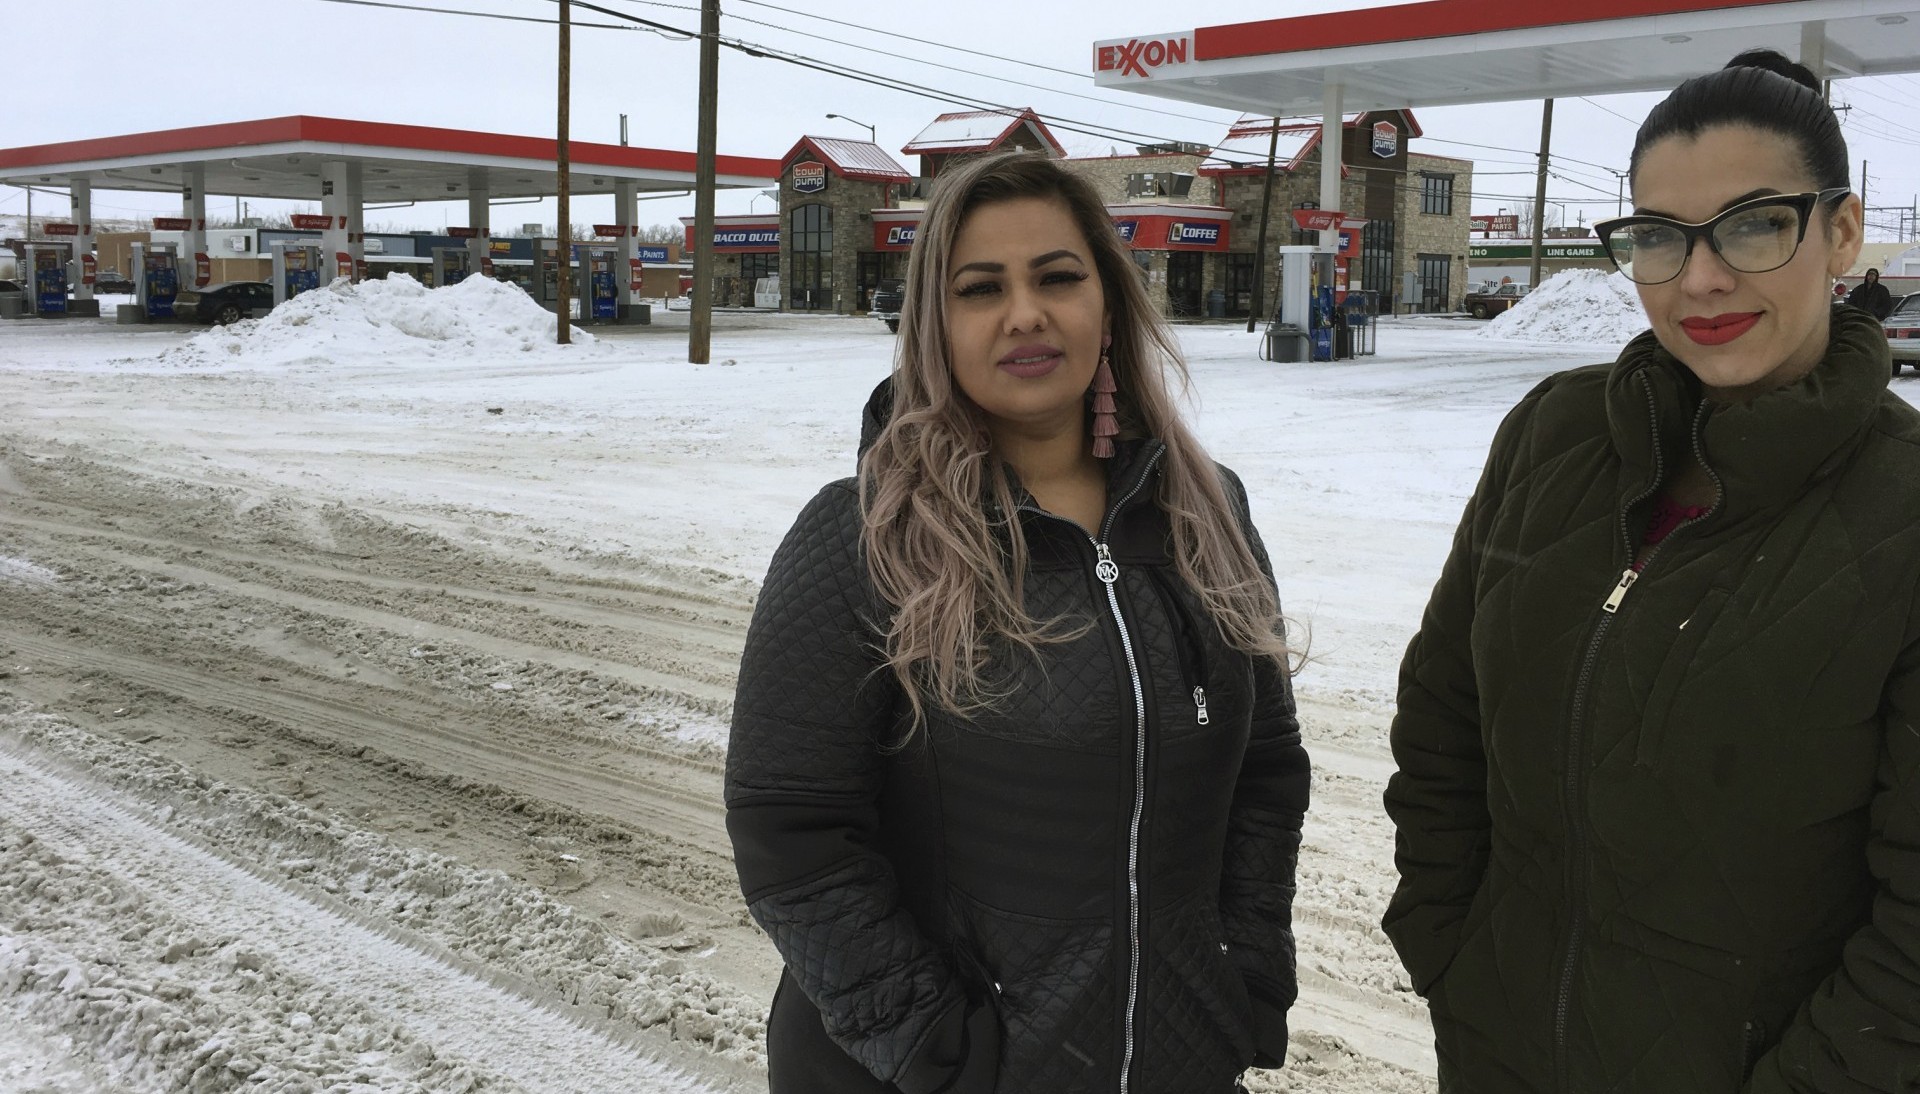 Martha Hernandez y Ana Suda aseguran haber sido detenidas por hablar español (Brooke Swaney/ACLU of Montana via AP)